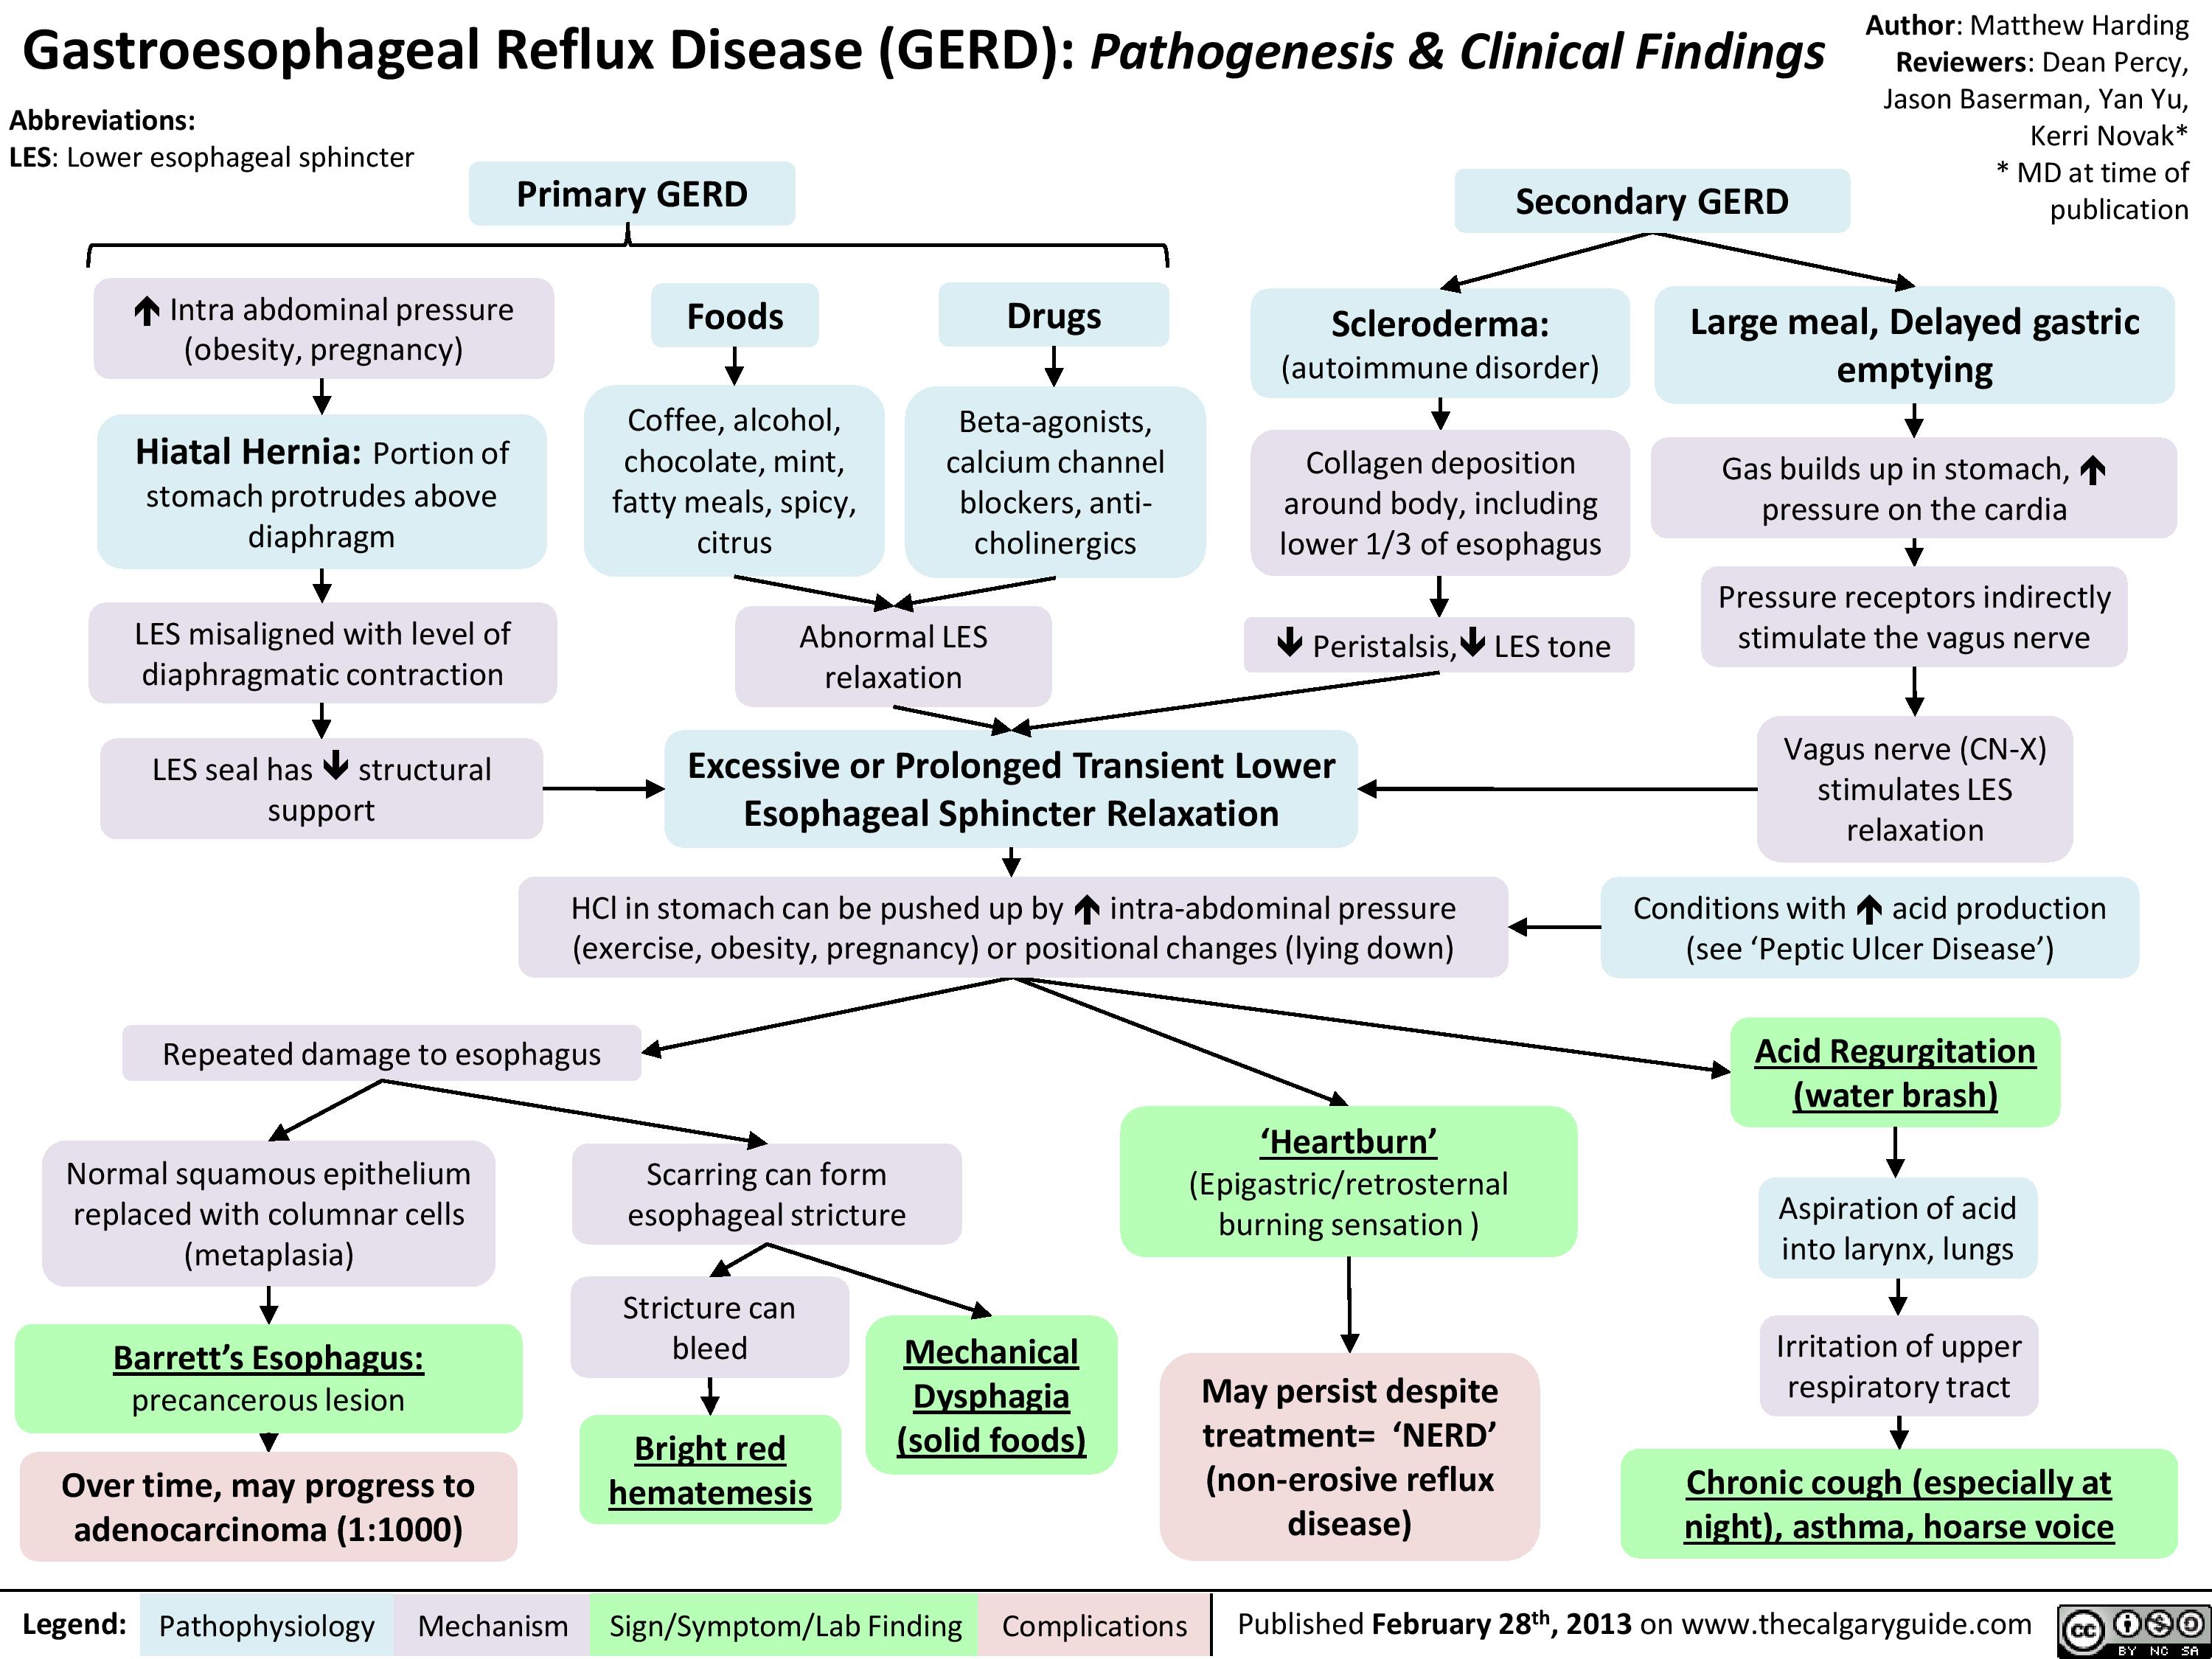 Gastroesophageal Reflux Disease (GERD) Pathogenesis and Clinical Findings